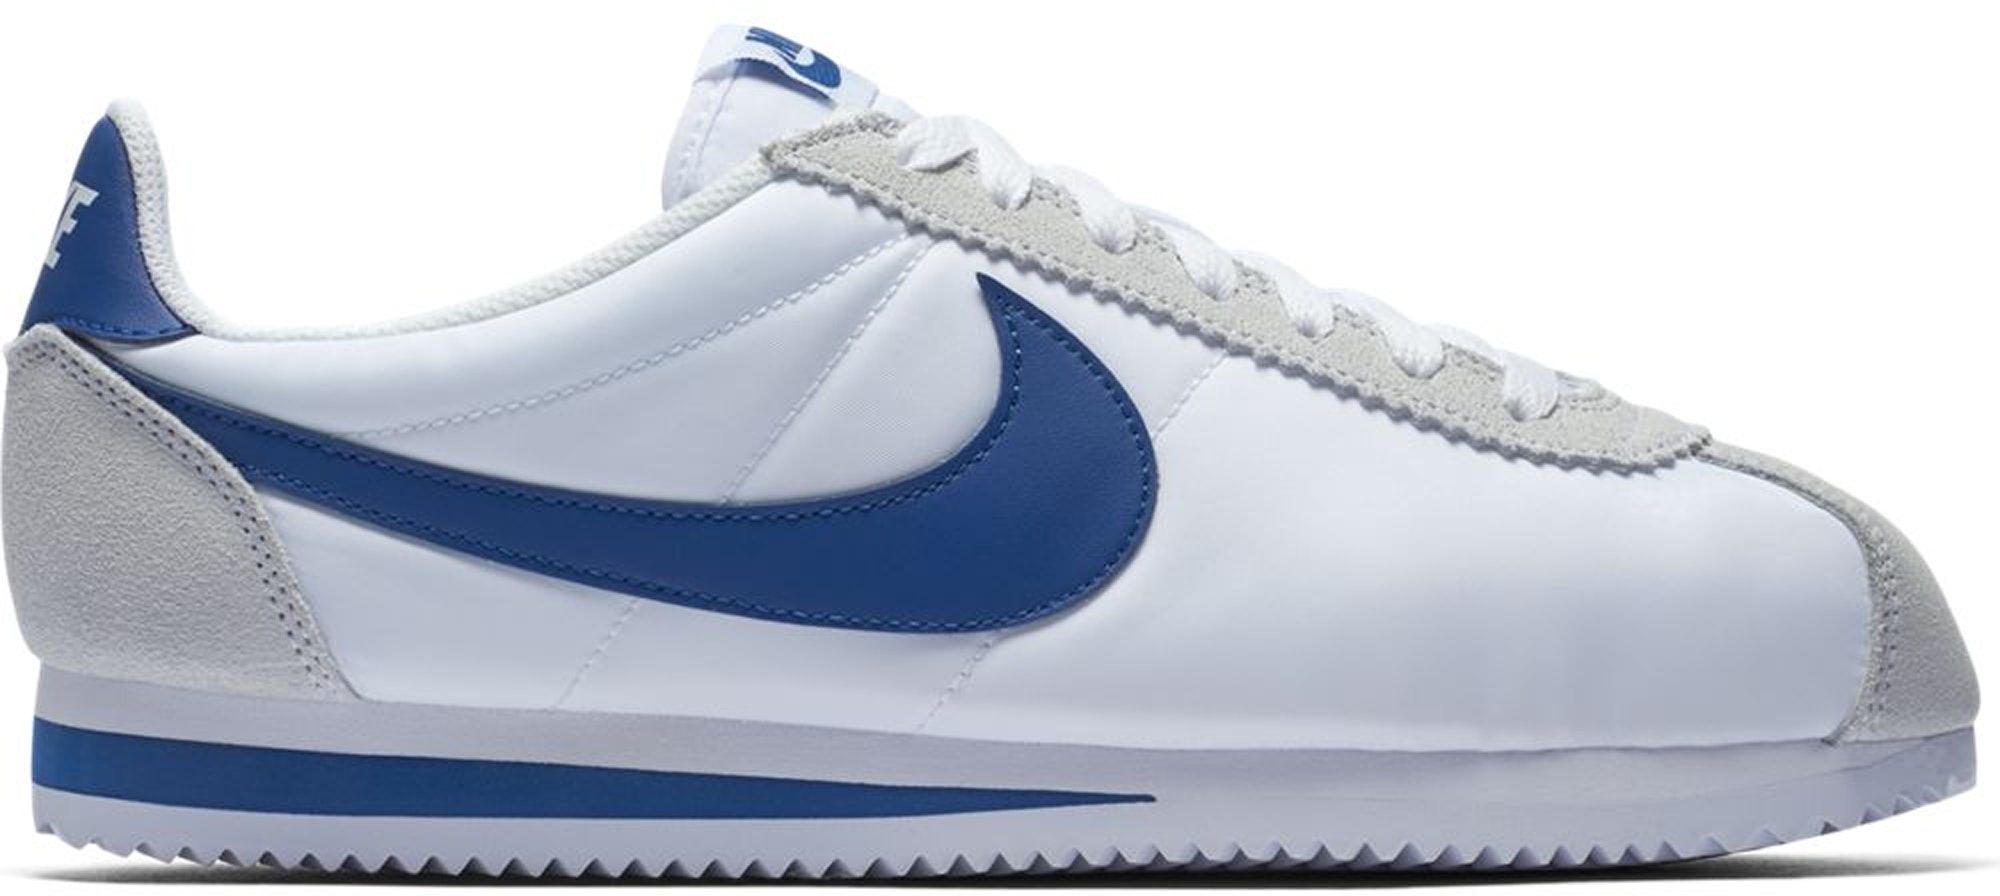 Nike Classic Cortez White Gym Blue - 807472-102 -